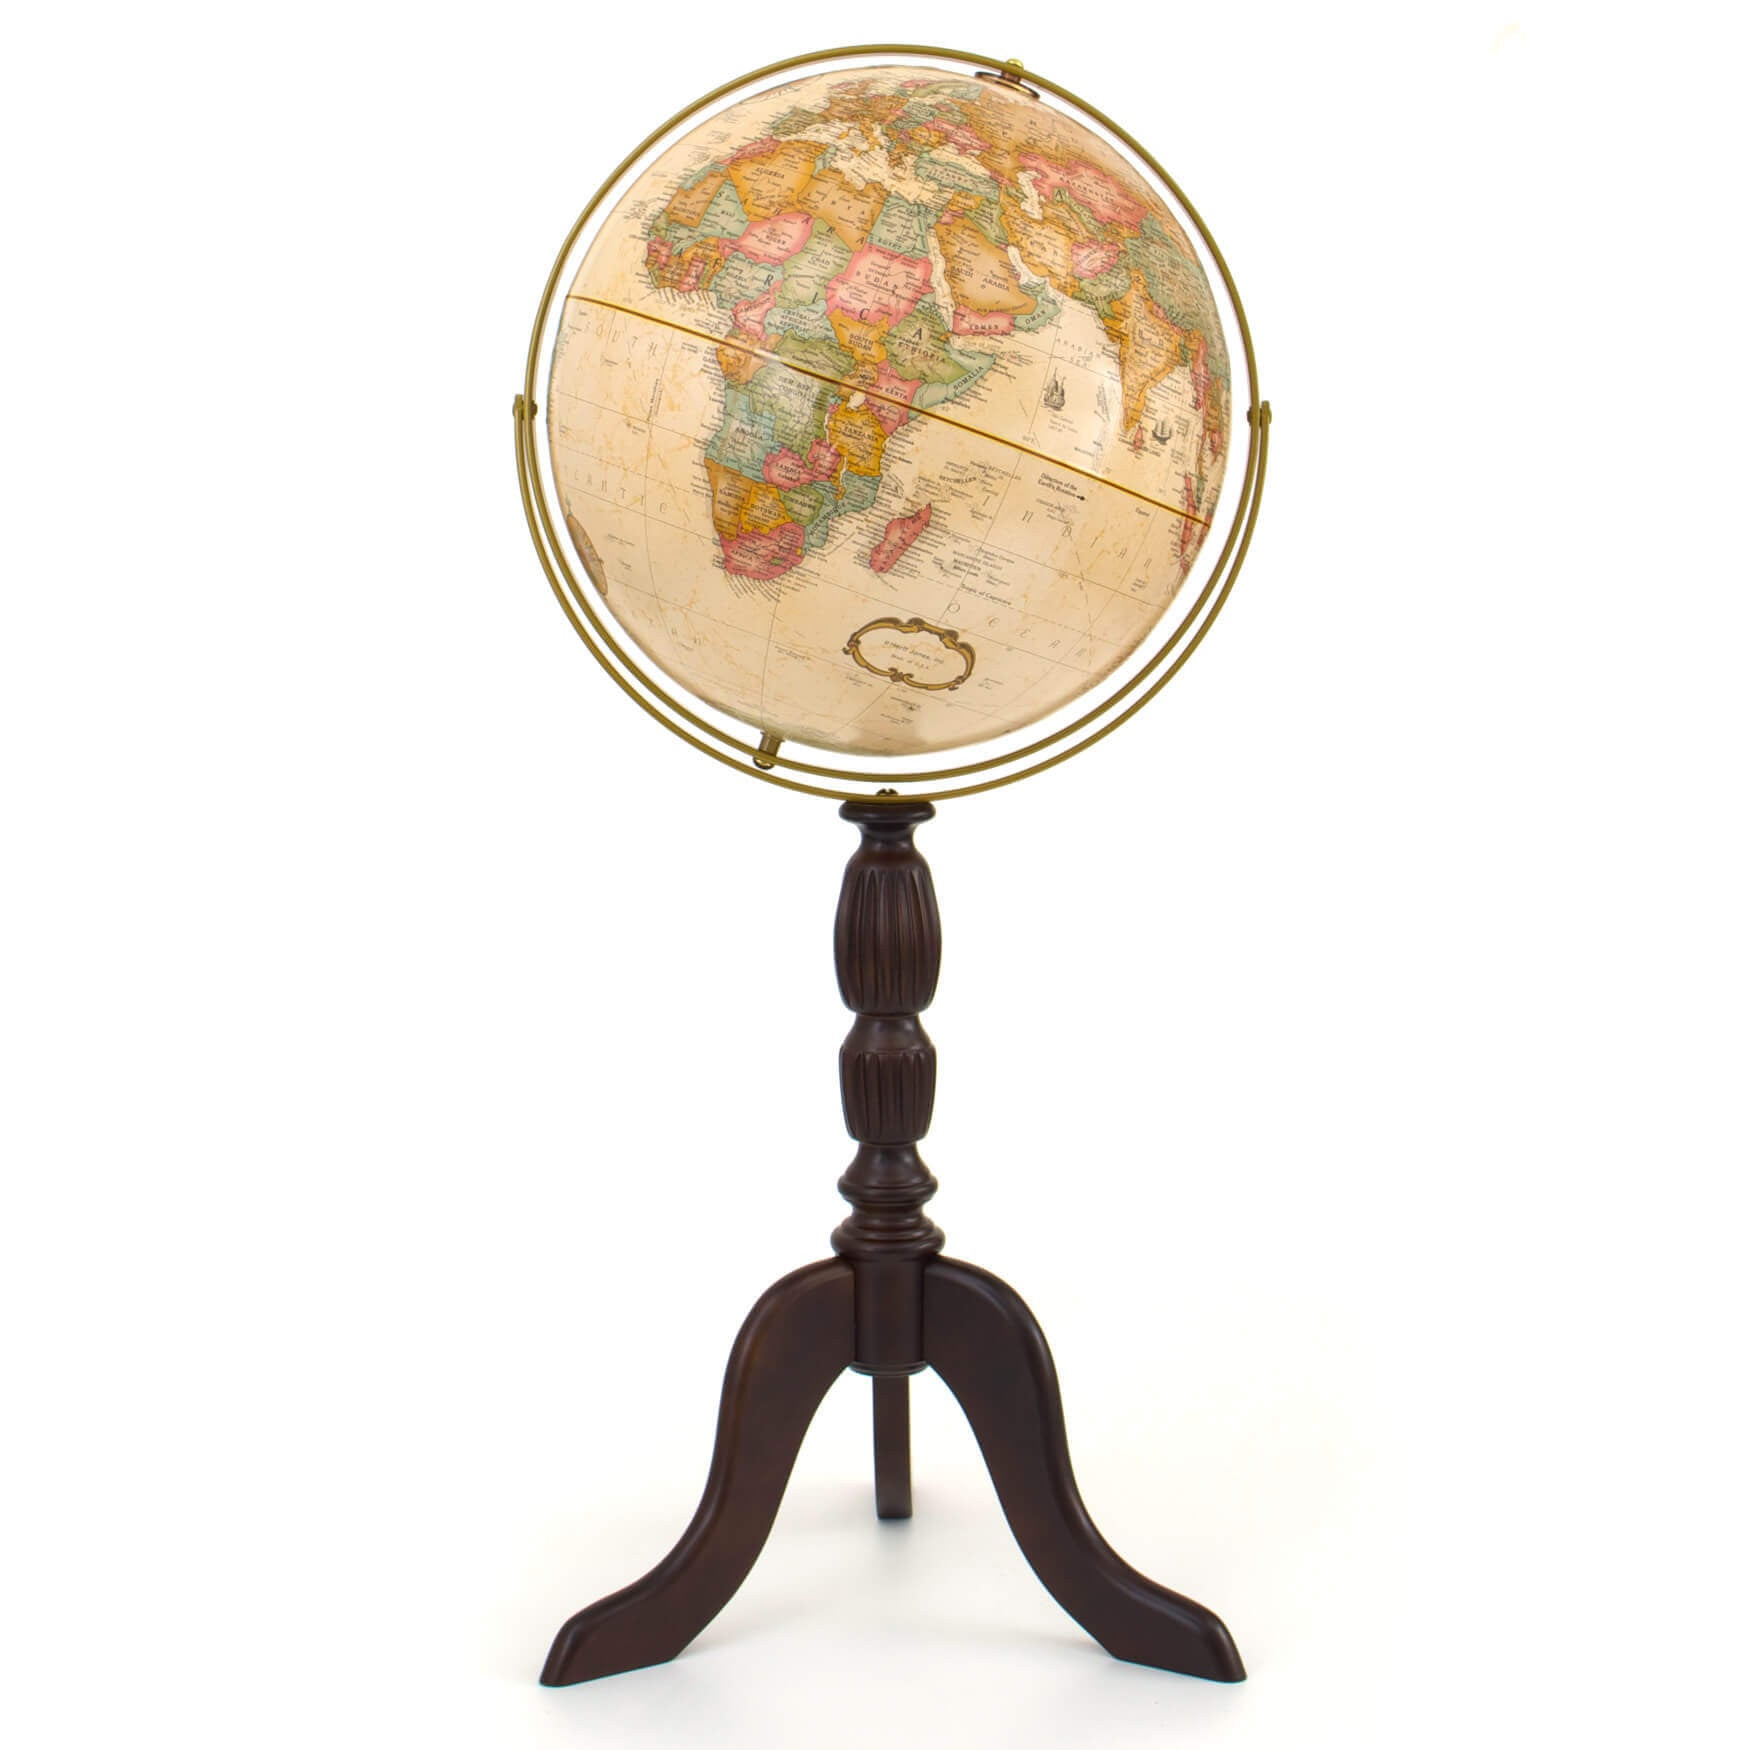 The Cambridge 40cm Globe by Replogle